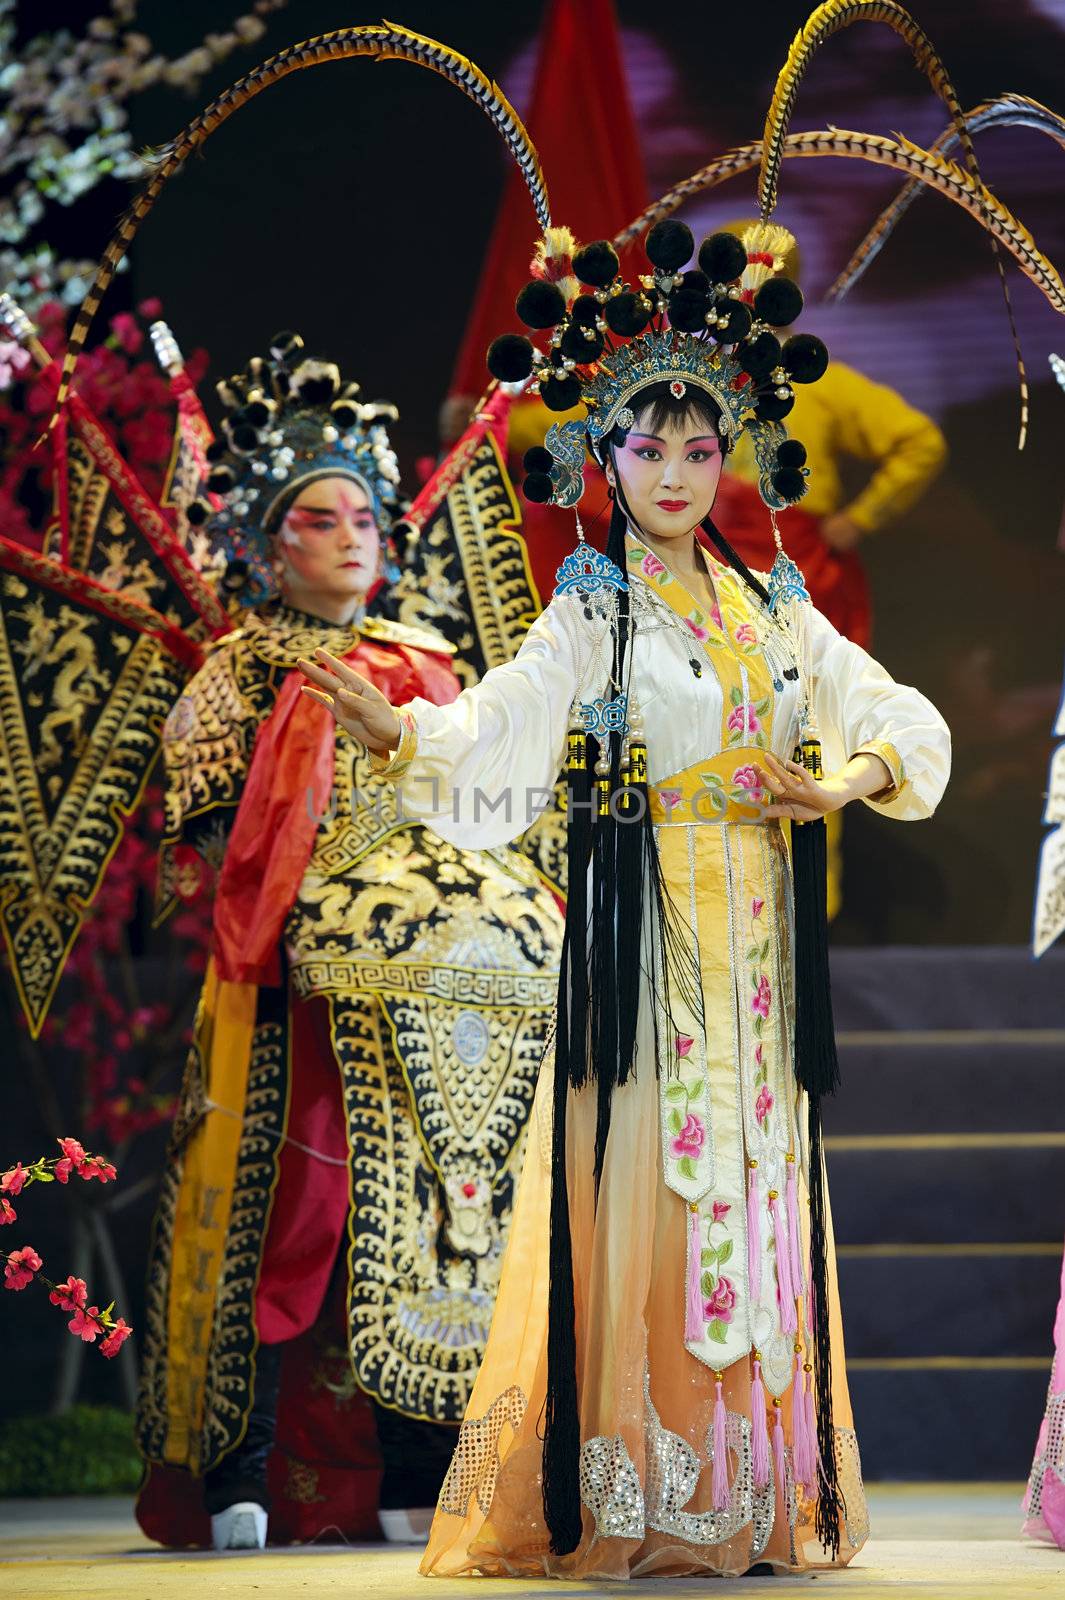 CHENGDU - Jun 10: chinese opera actress perform on stage at Jincheng theater.Jun 10, 2011 in Chengdu, China.